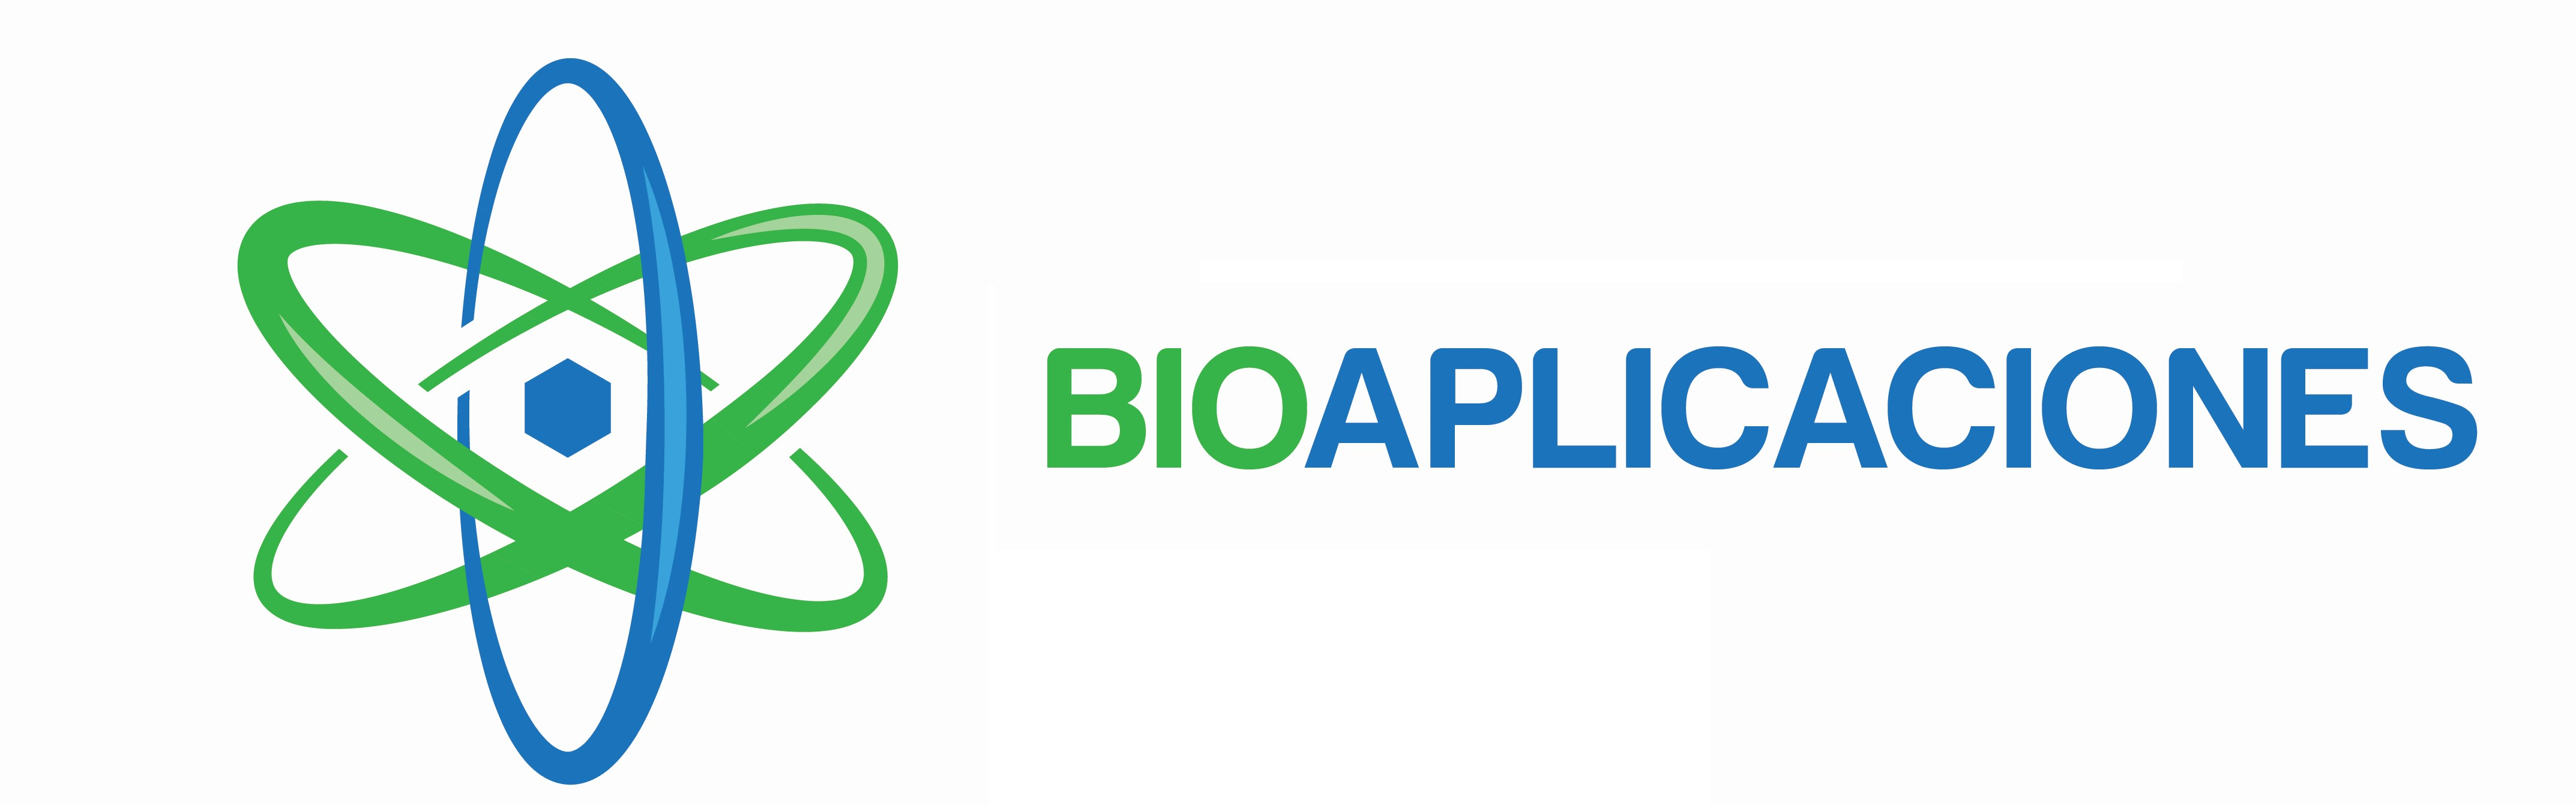 Bioaplicaciones